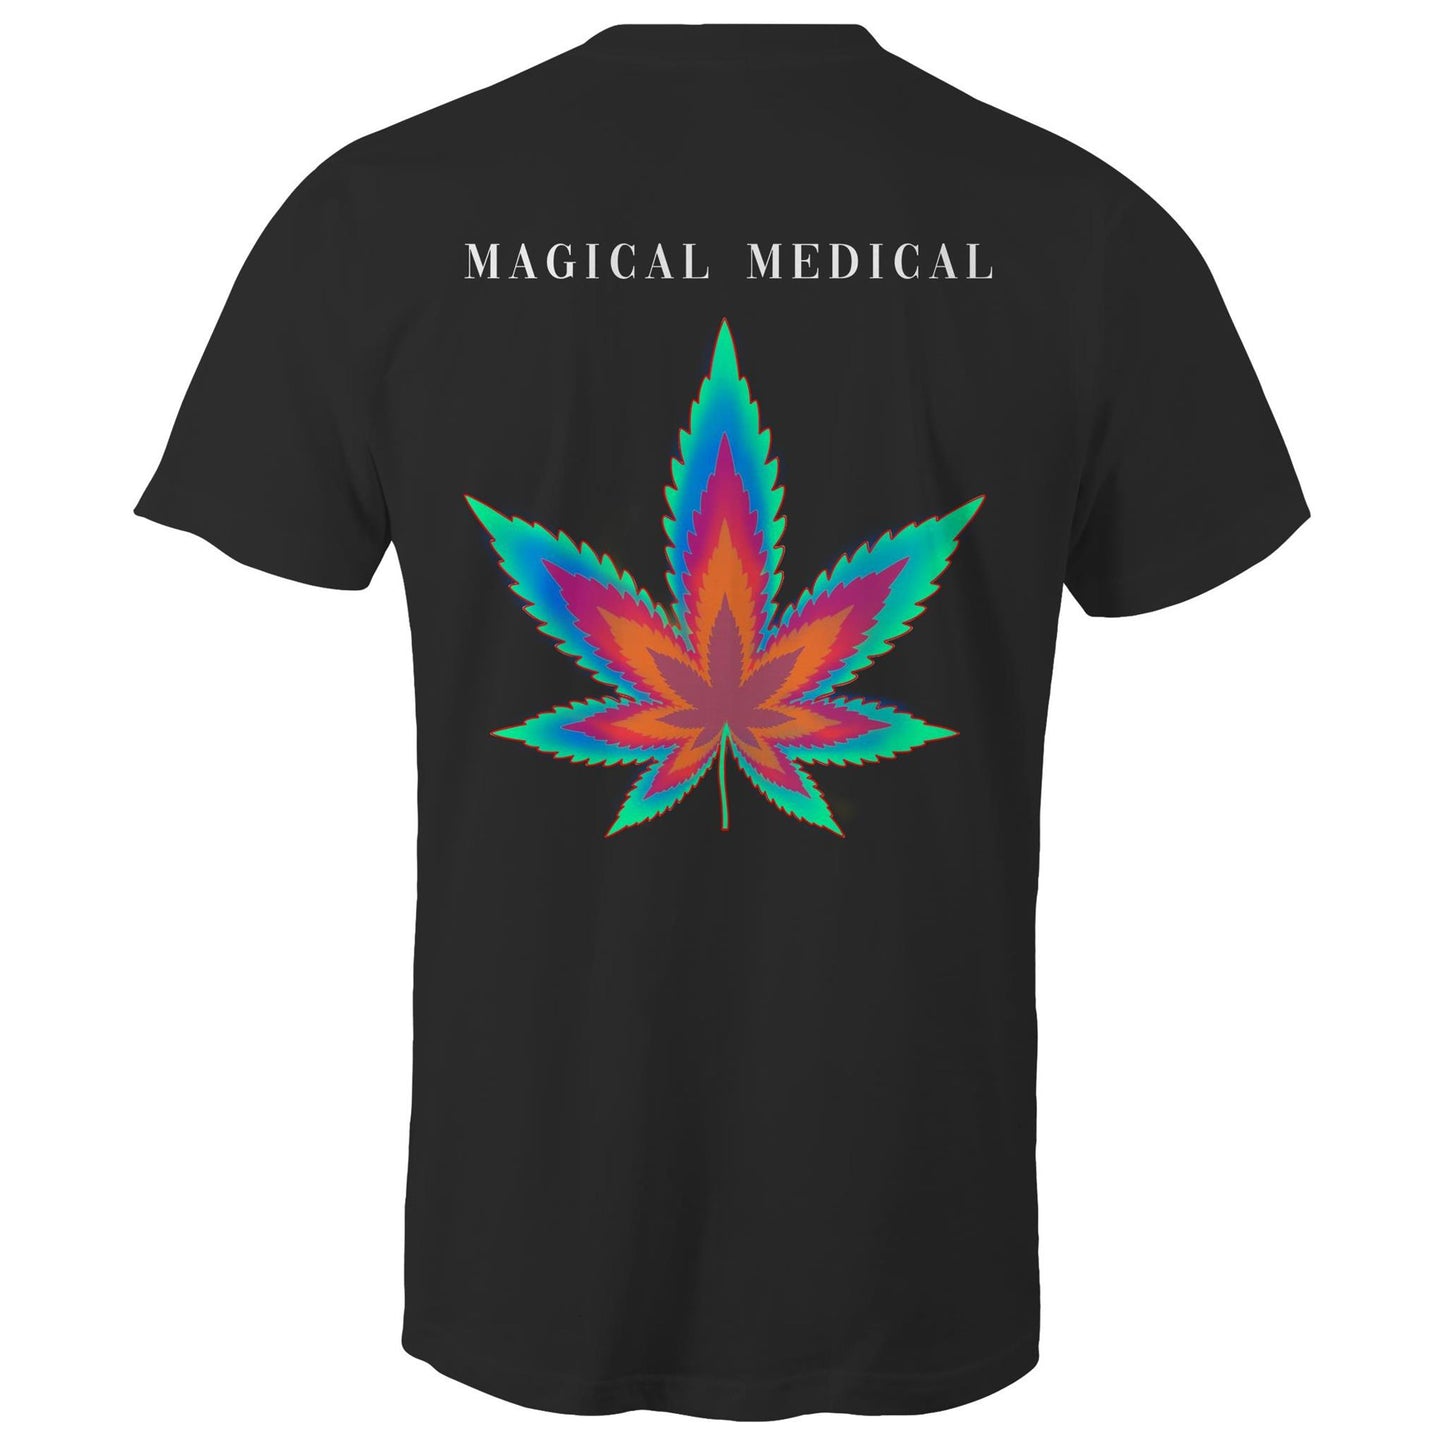 Magical Medical t shirts